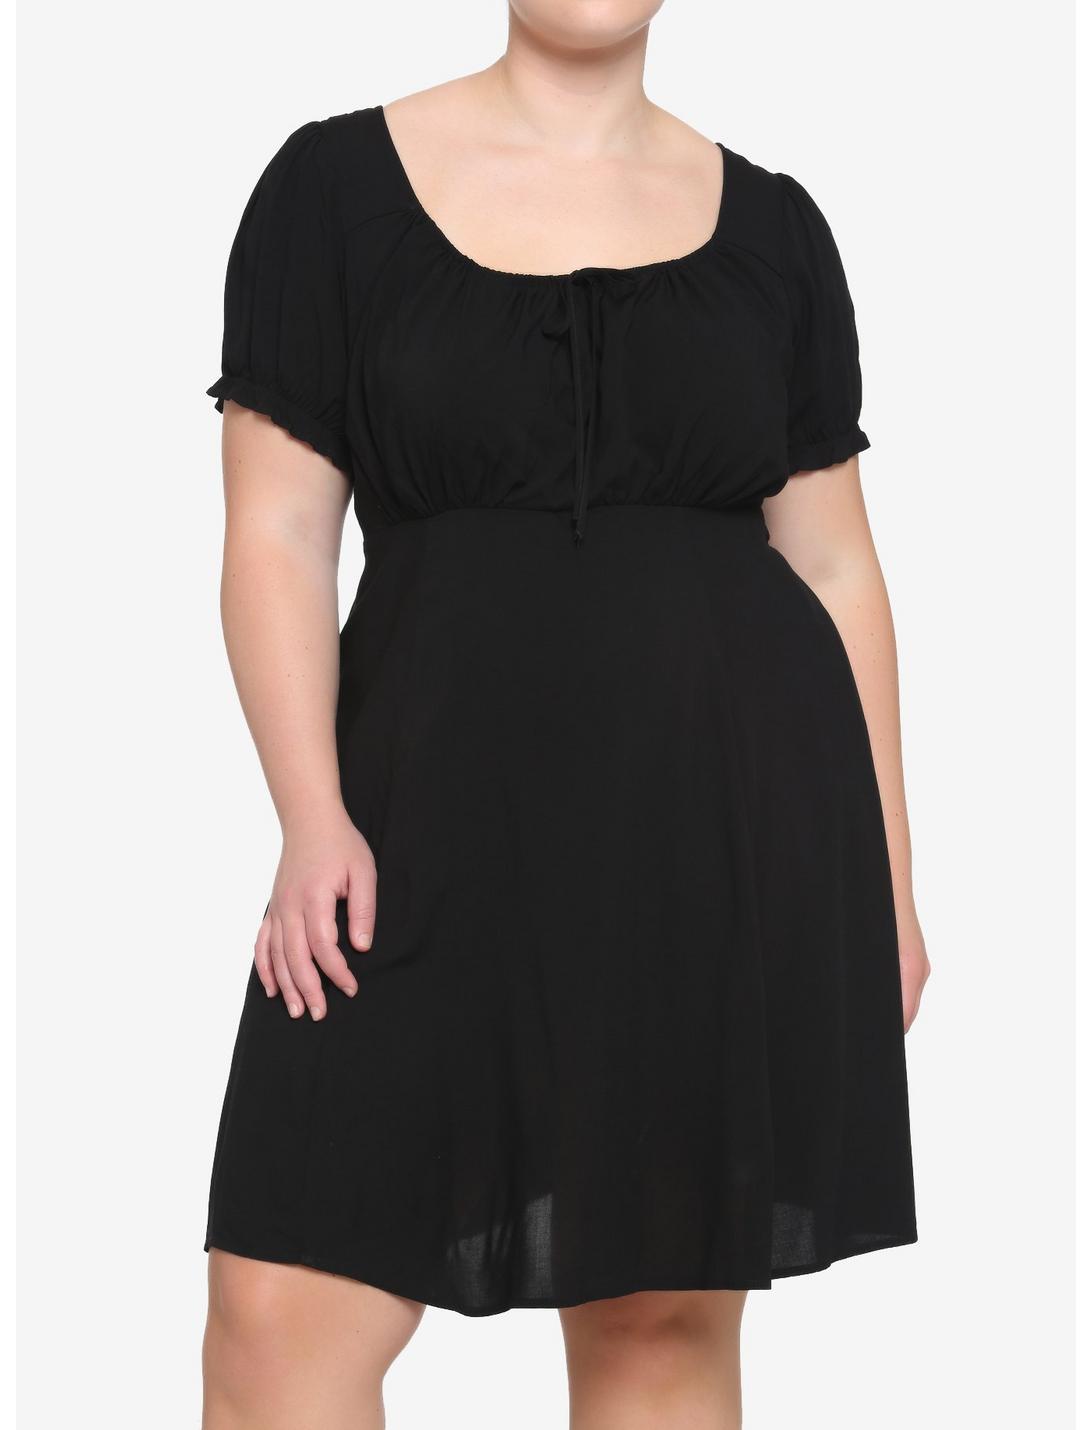 Black Puff Sleeve Dress Plus Size, BLACK, hi-res